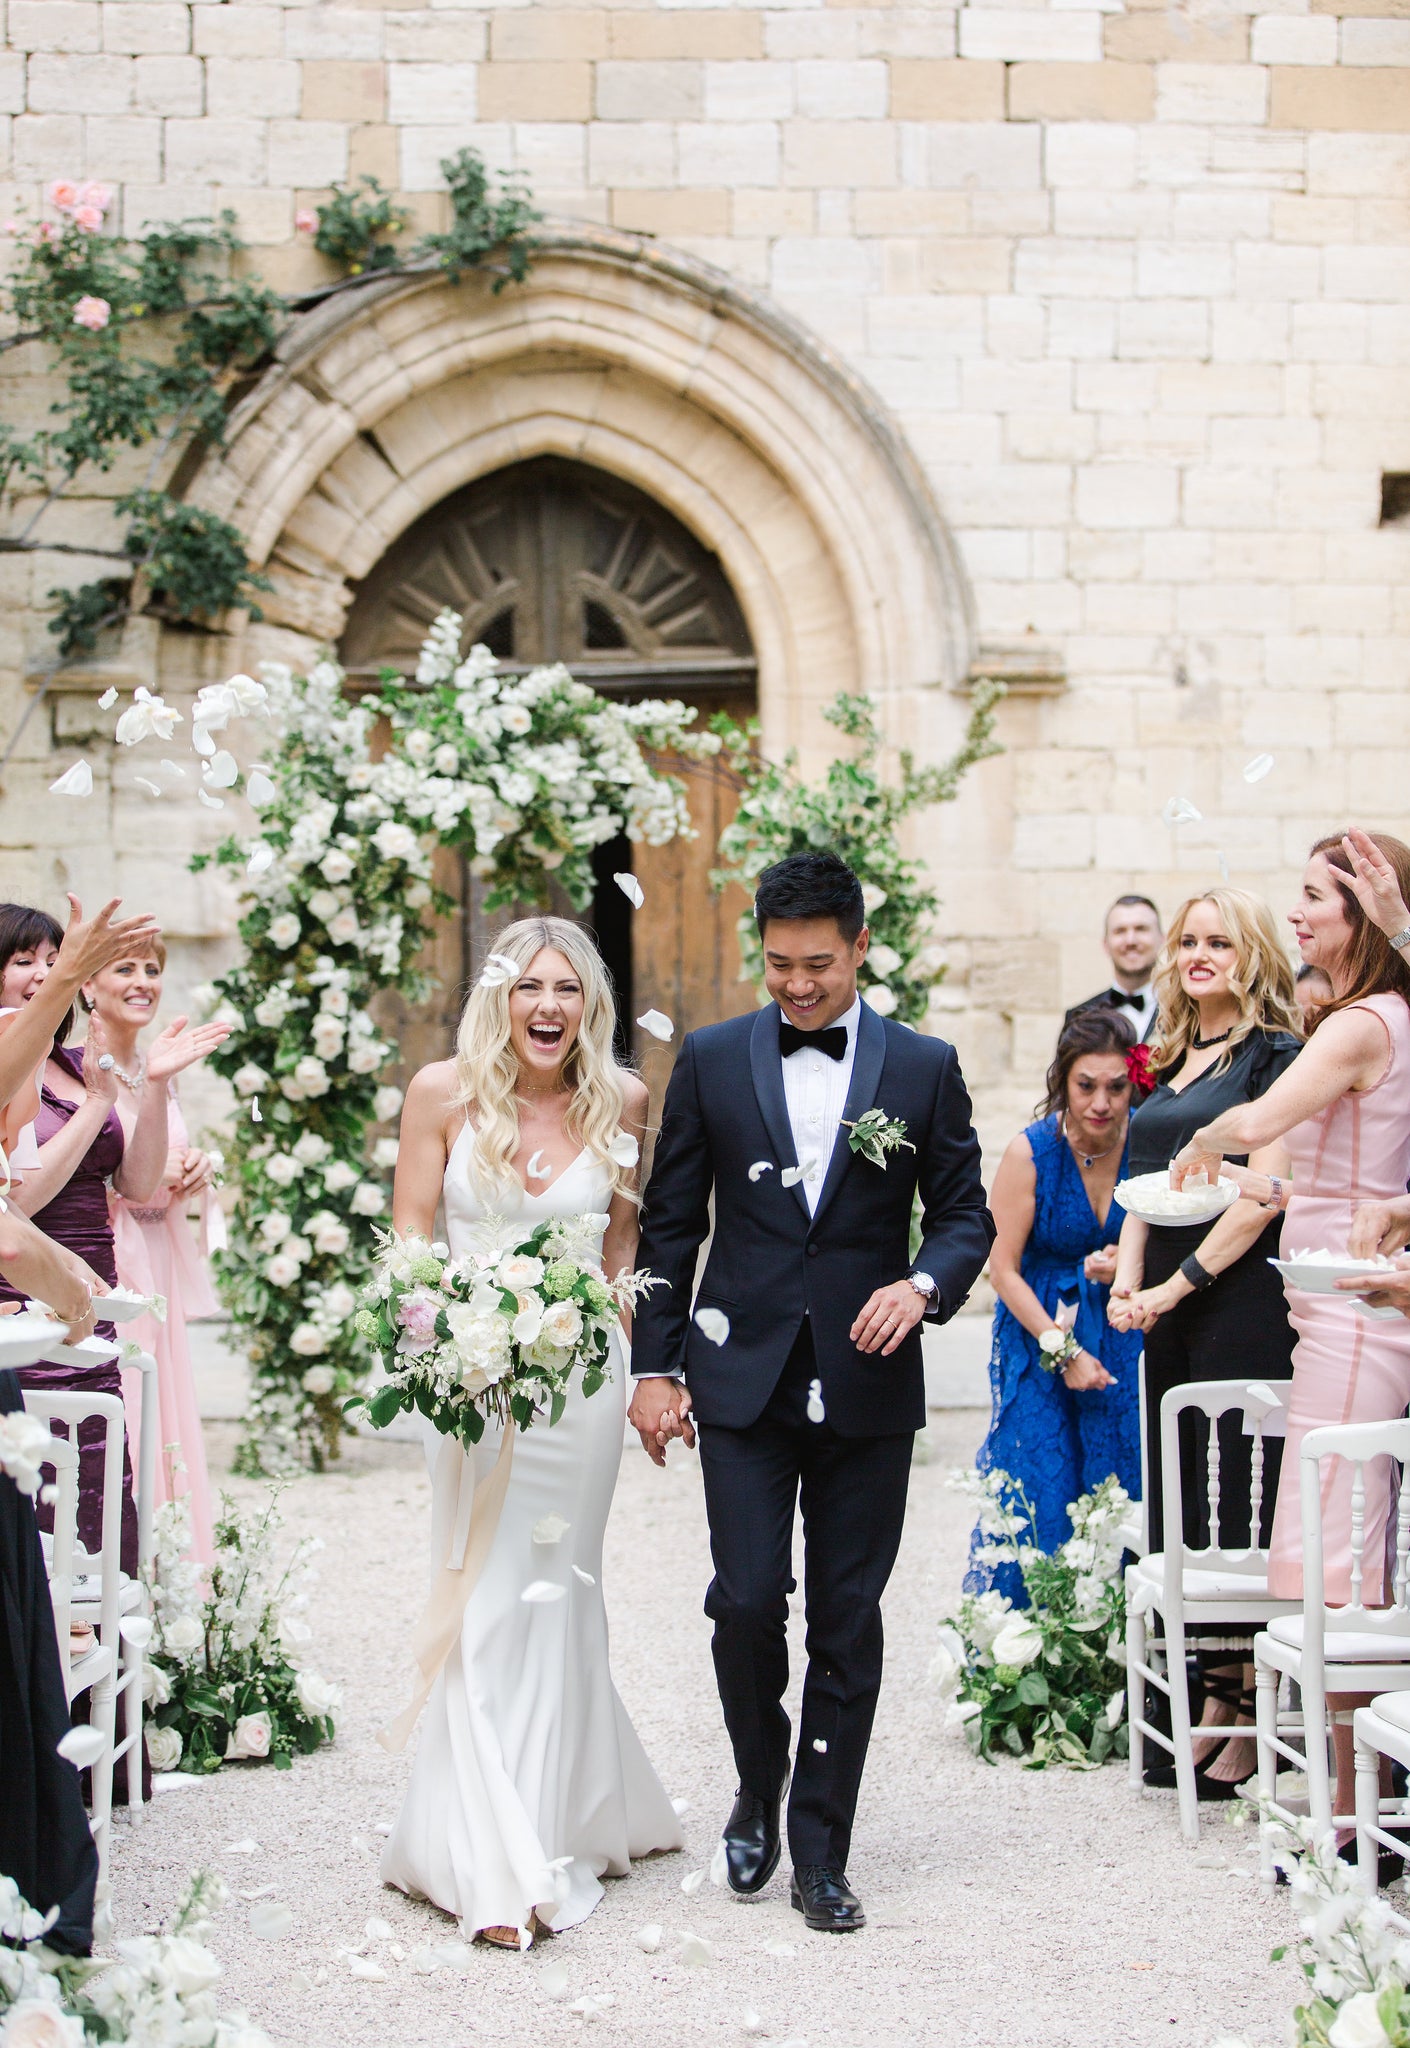  Katie Dean + Jon Tam Destination wedding, Provence, France Wedding, rose petals